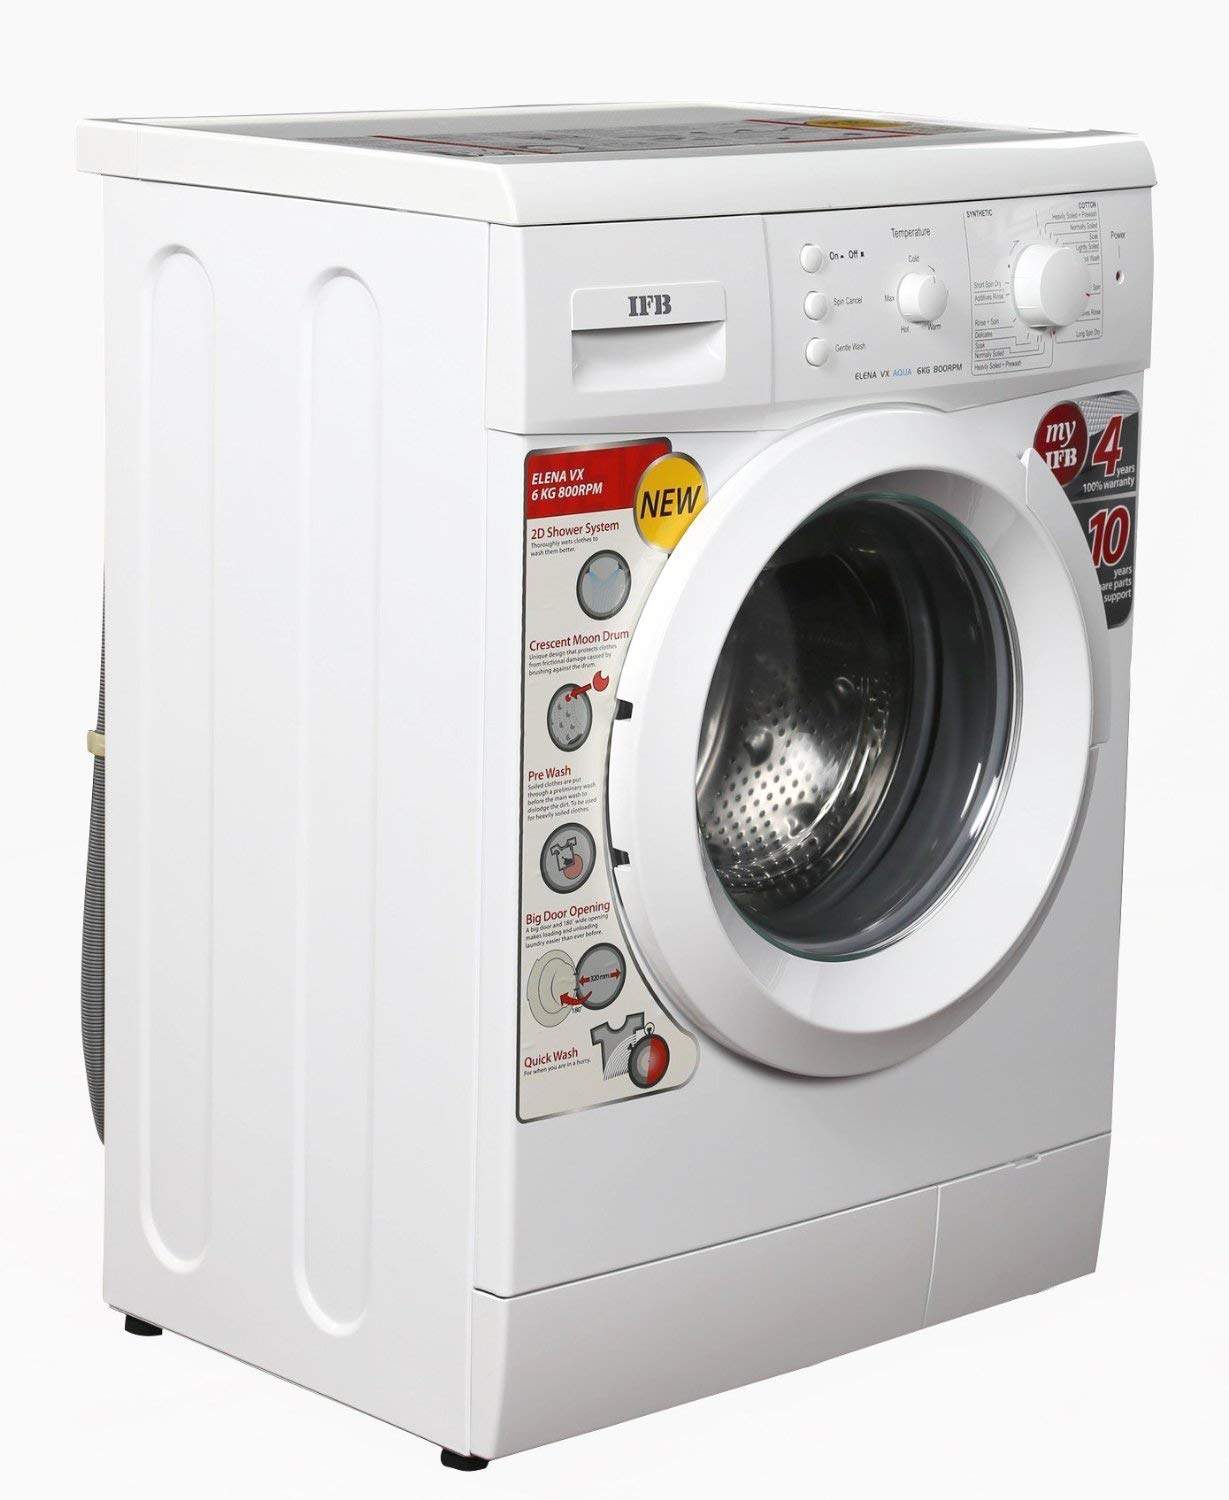 Washing Machines: Buy Washing Machines at Best Prices Online